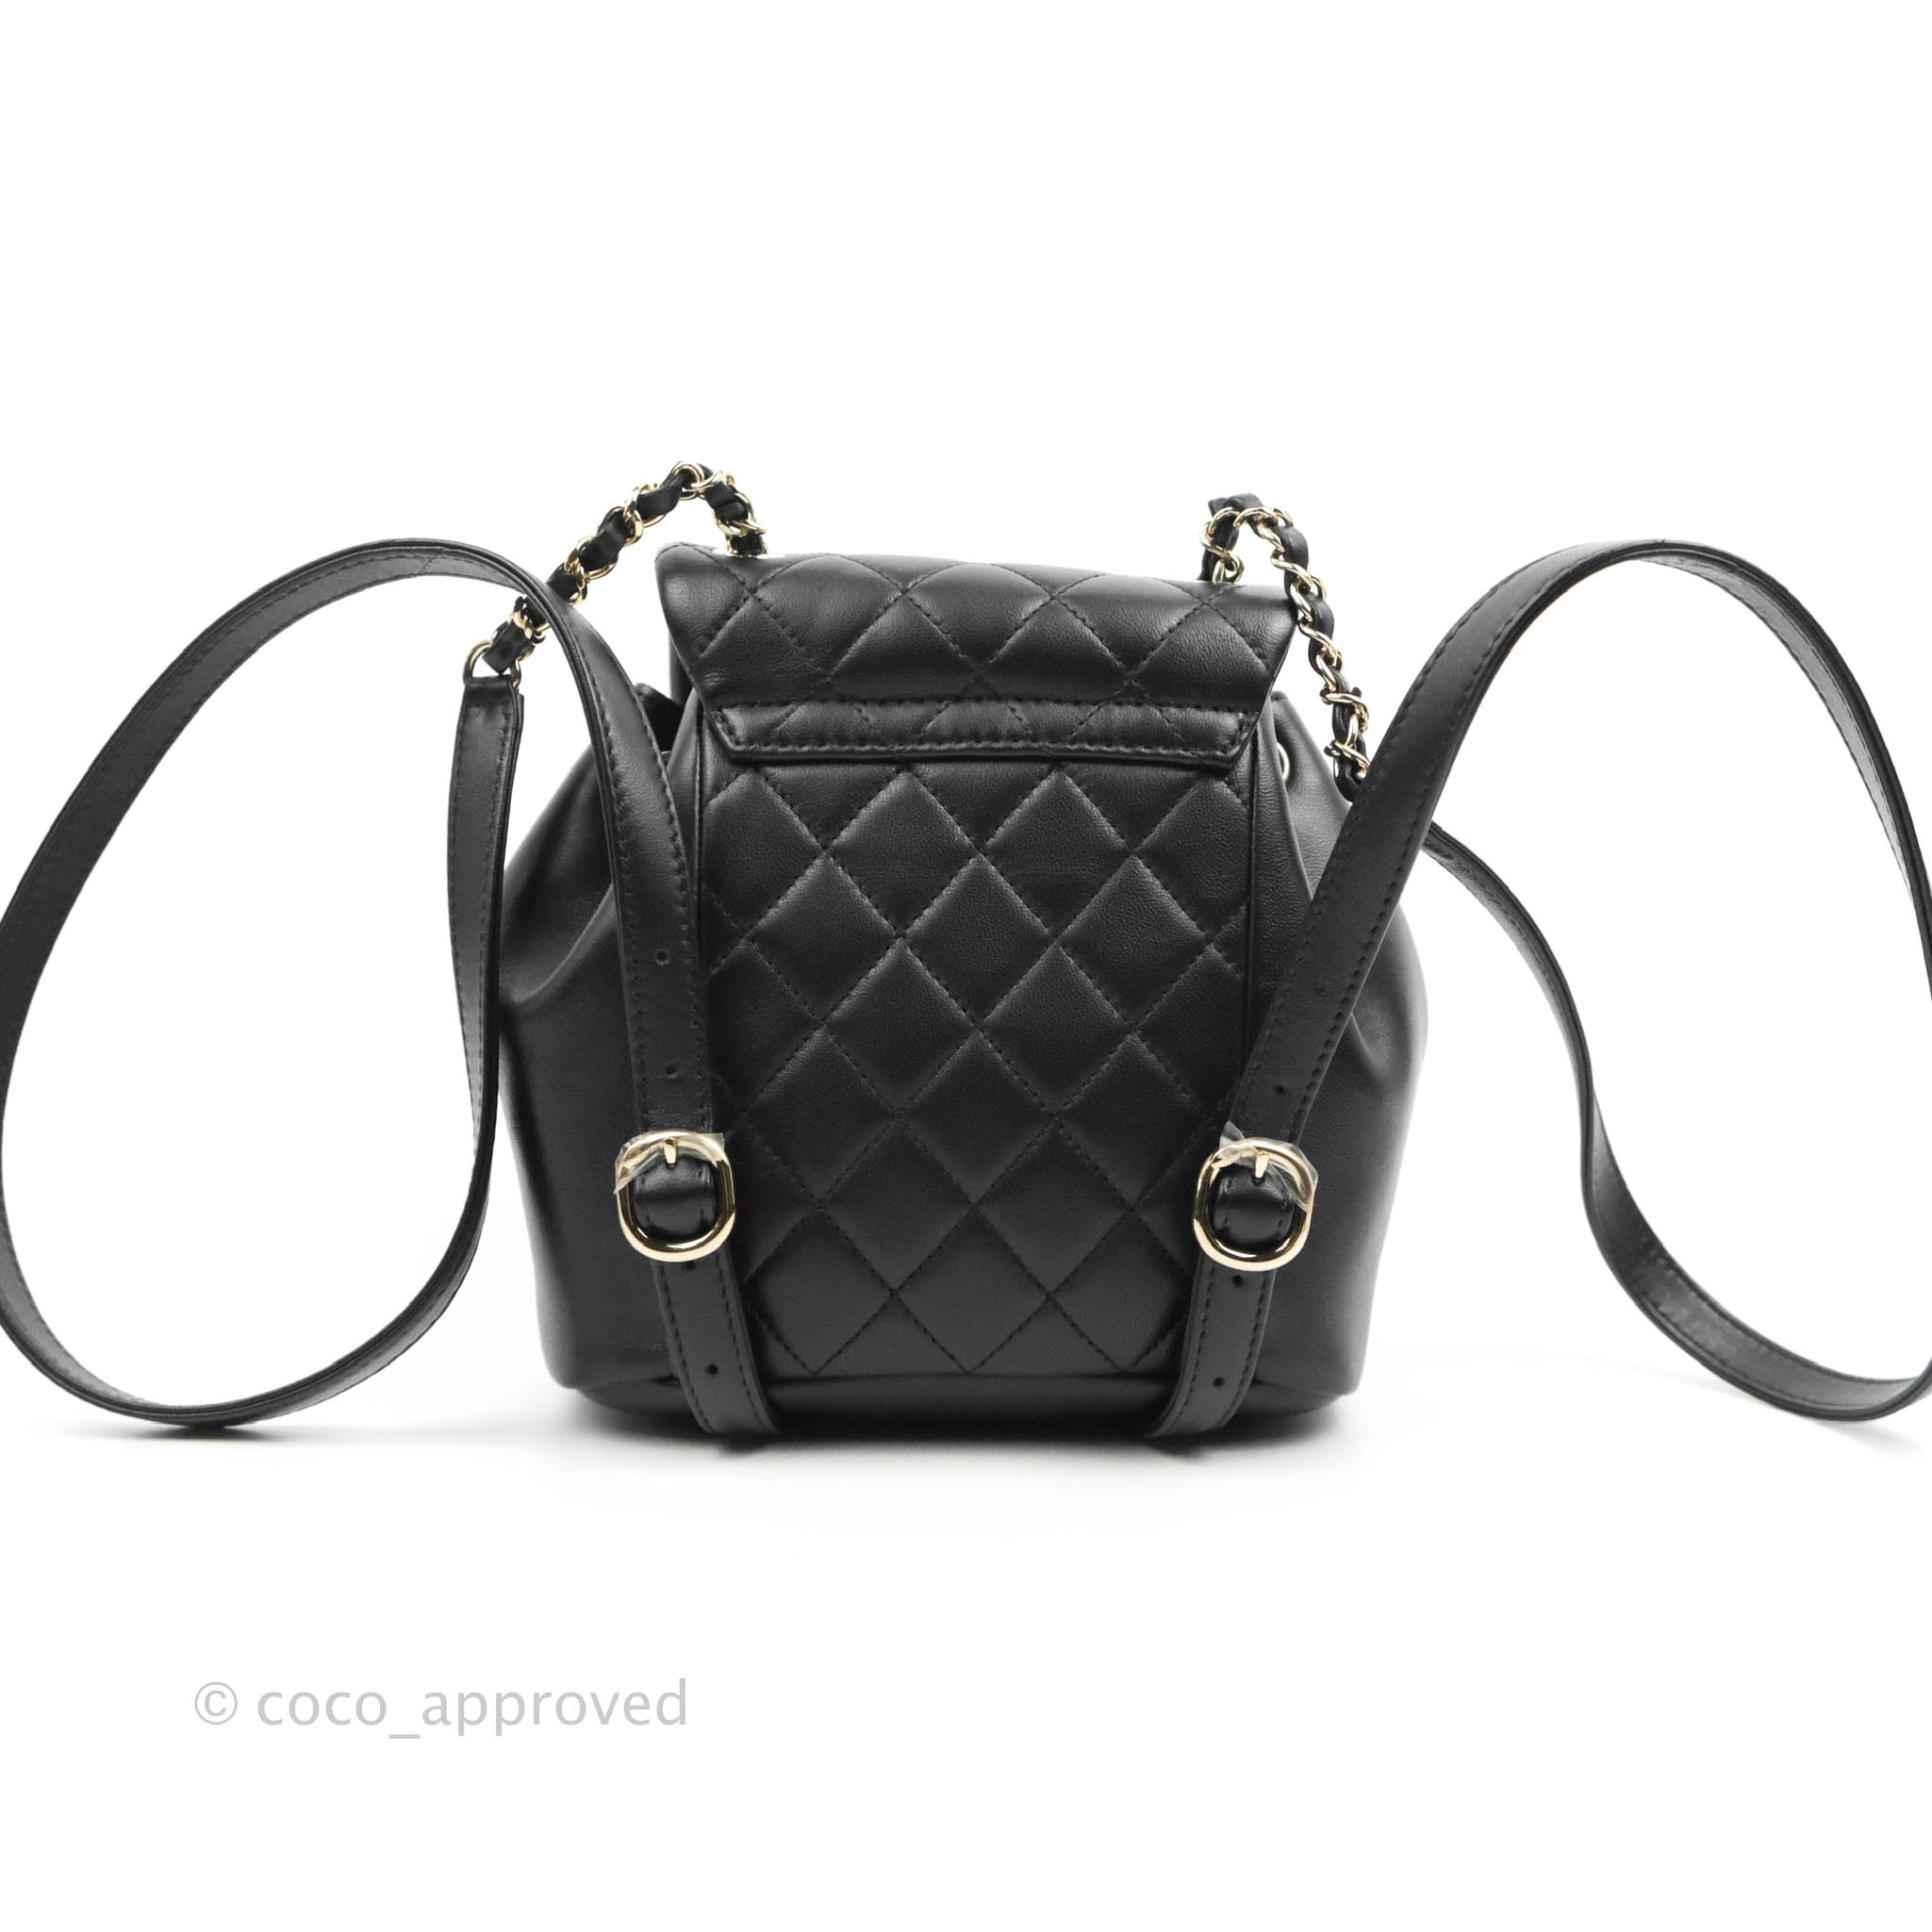 Chanel Large 22 Backpack - Black Backpacks, Handbags - CHA929520